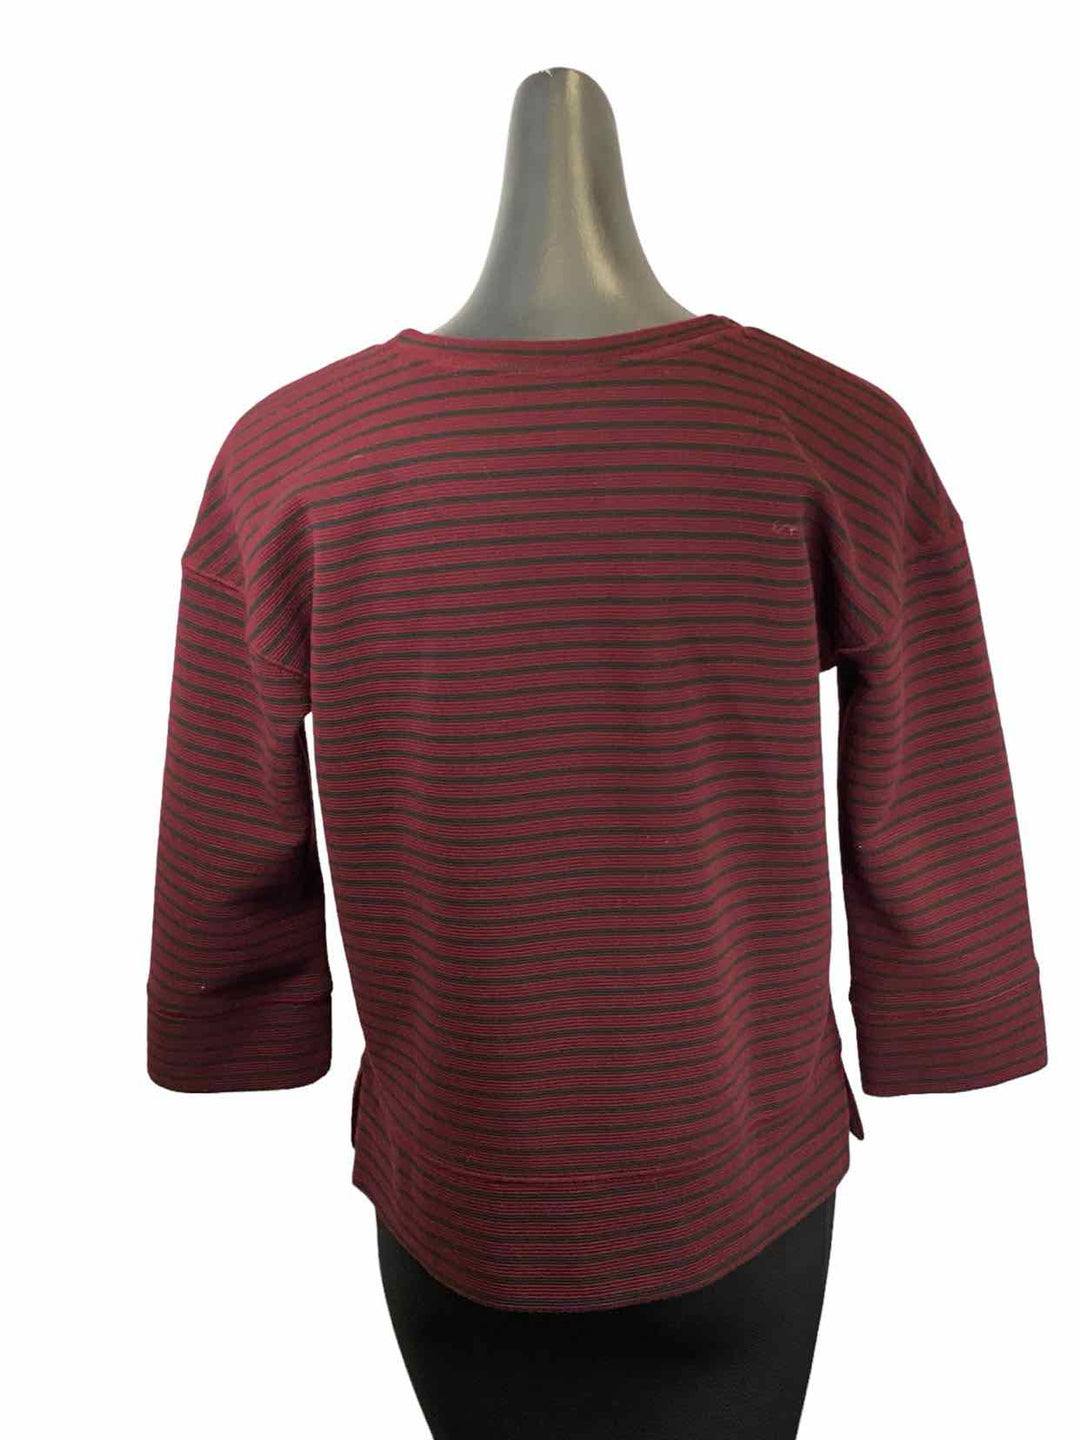 Lou & Gray Size XS Red Black Striped Long Sleeve Shirts